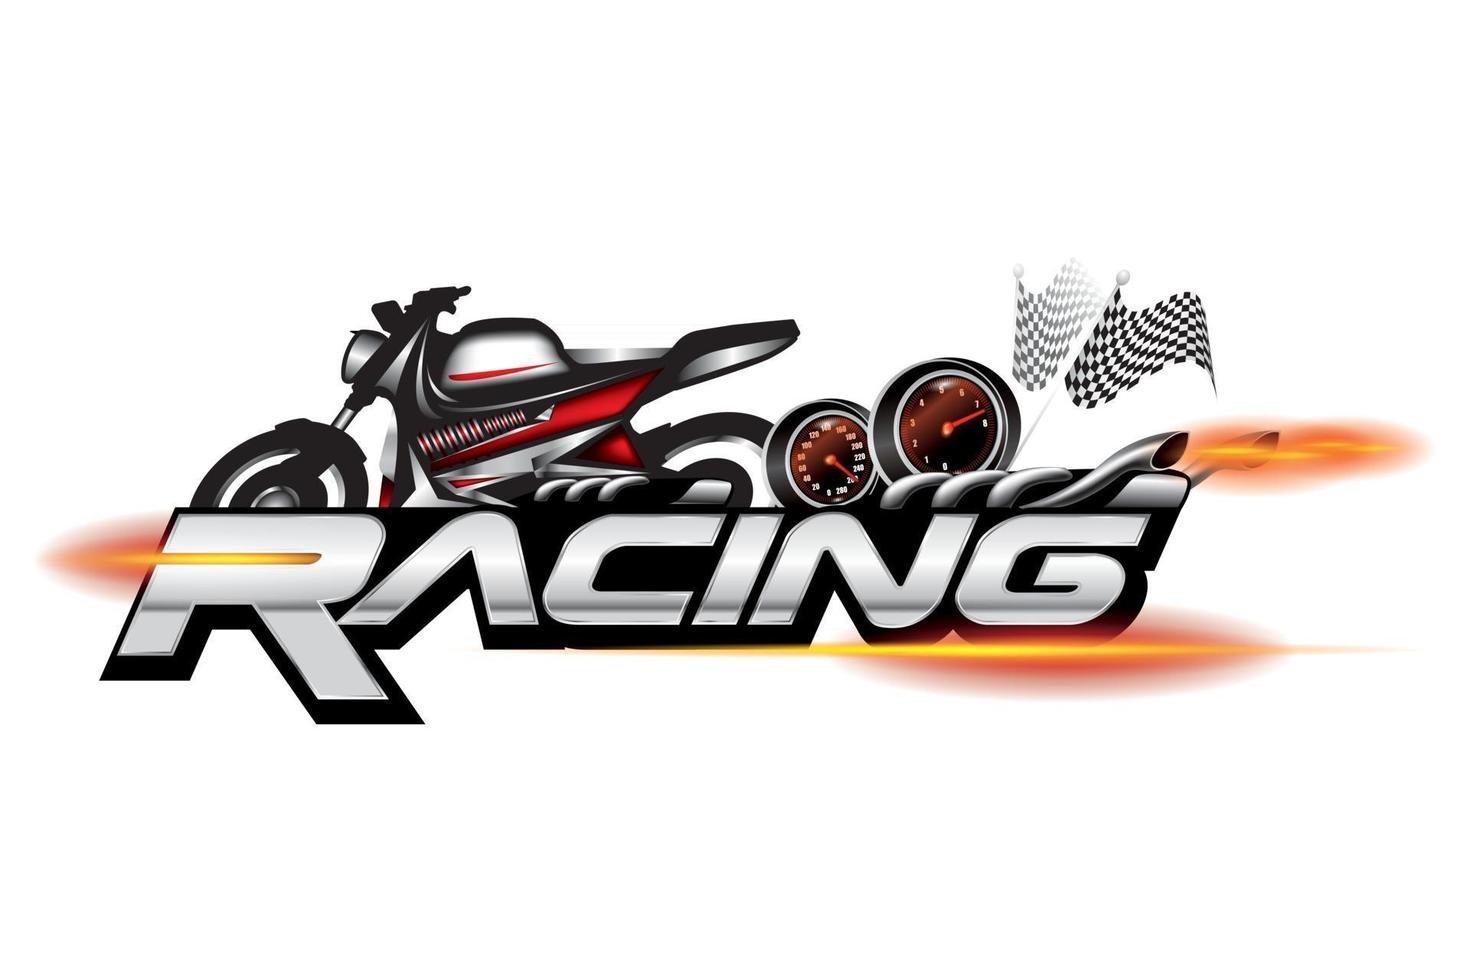 Emblema de motocicleta de carreras, vector de diseño de logotipo.